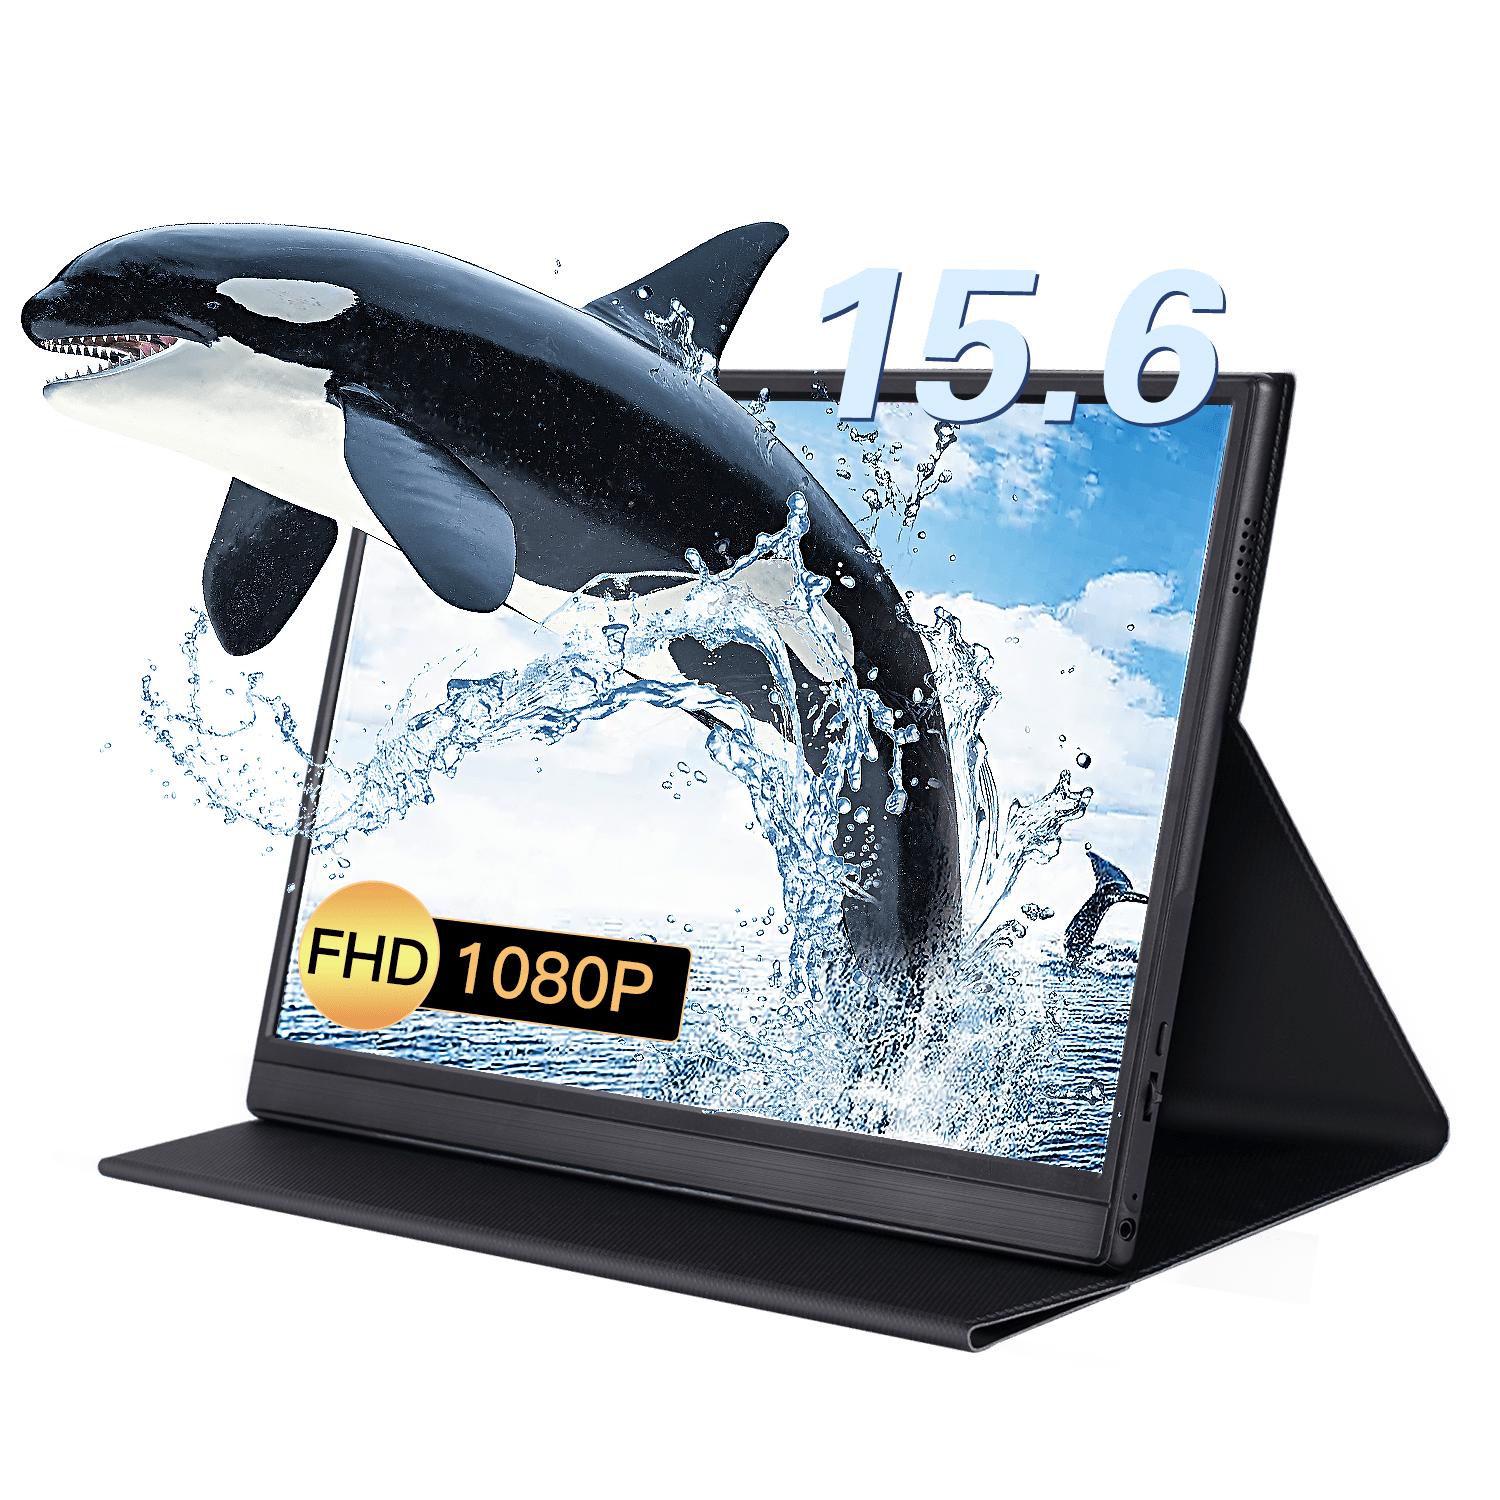 Portable Monitor Zero Frame, 15.6 Ultra Slim 1080P FHD 100% sRGB Display  IPS Monitor, Plug&Play Second External Monitor for Laptop PC Phone Mac Xbox